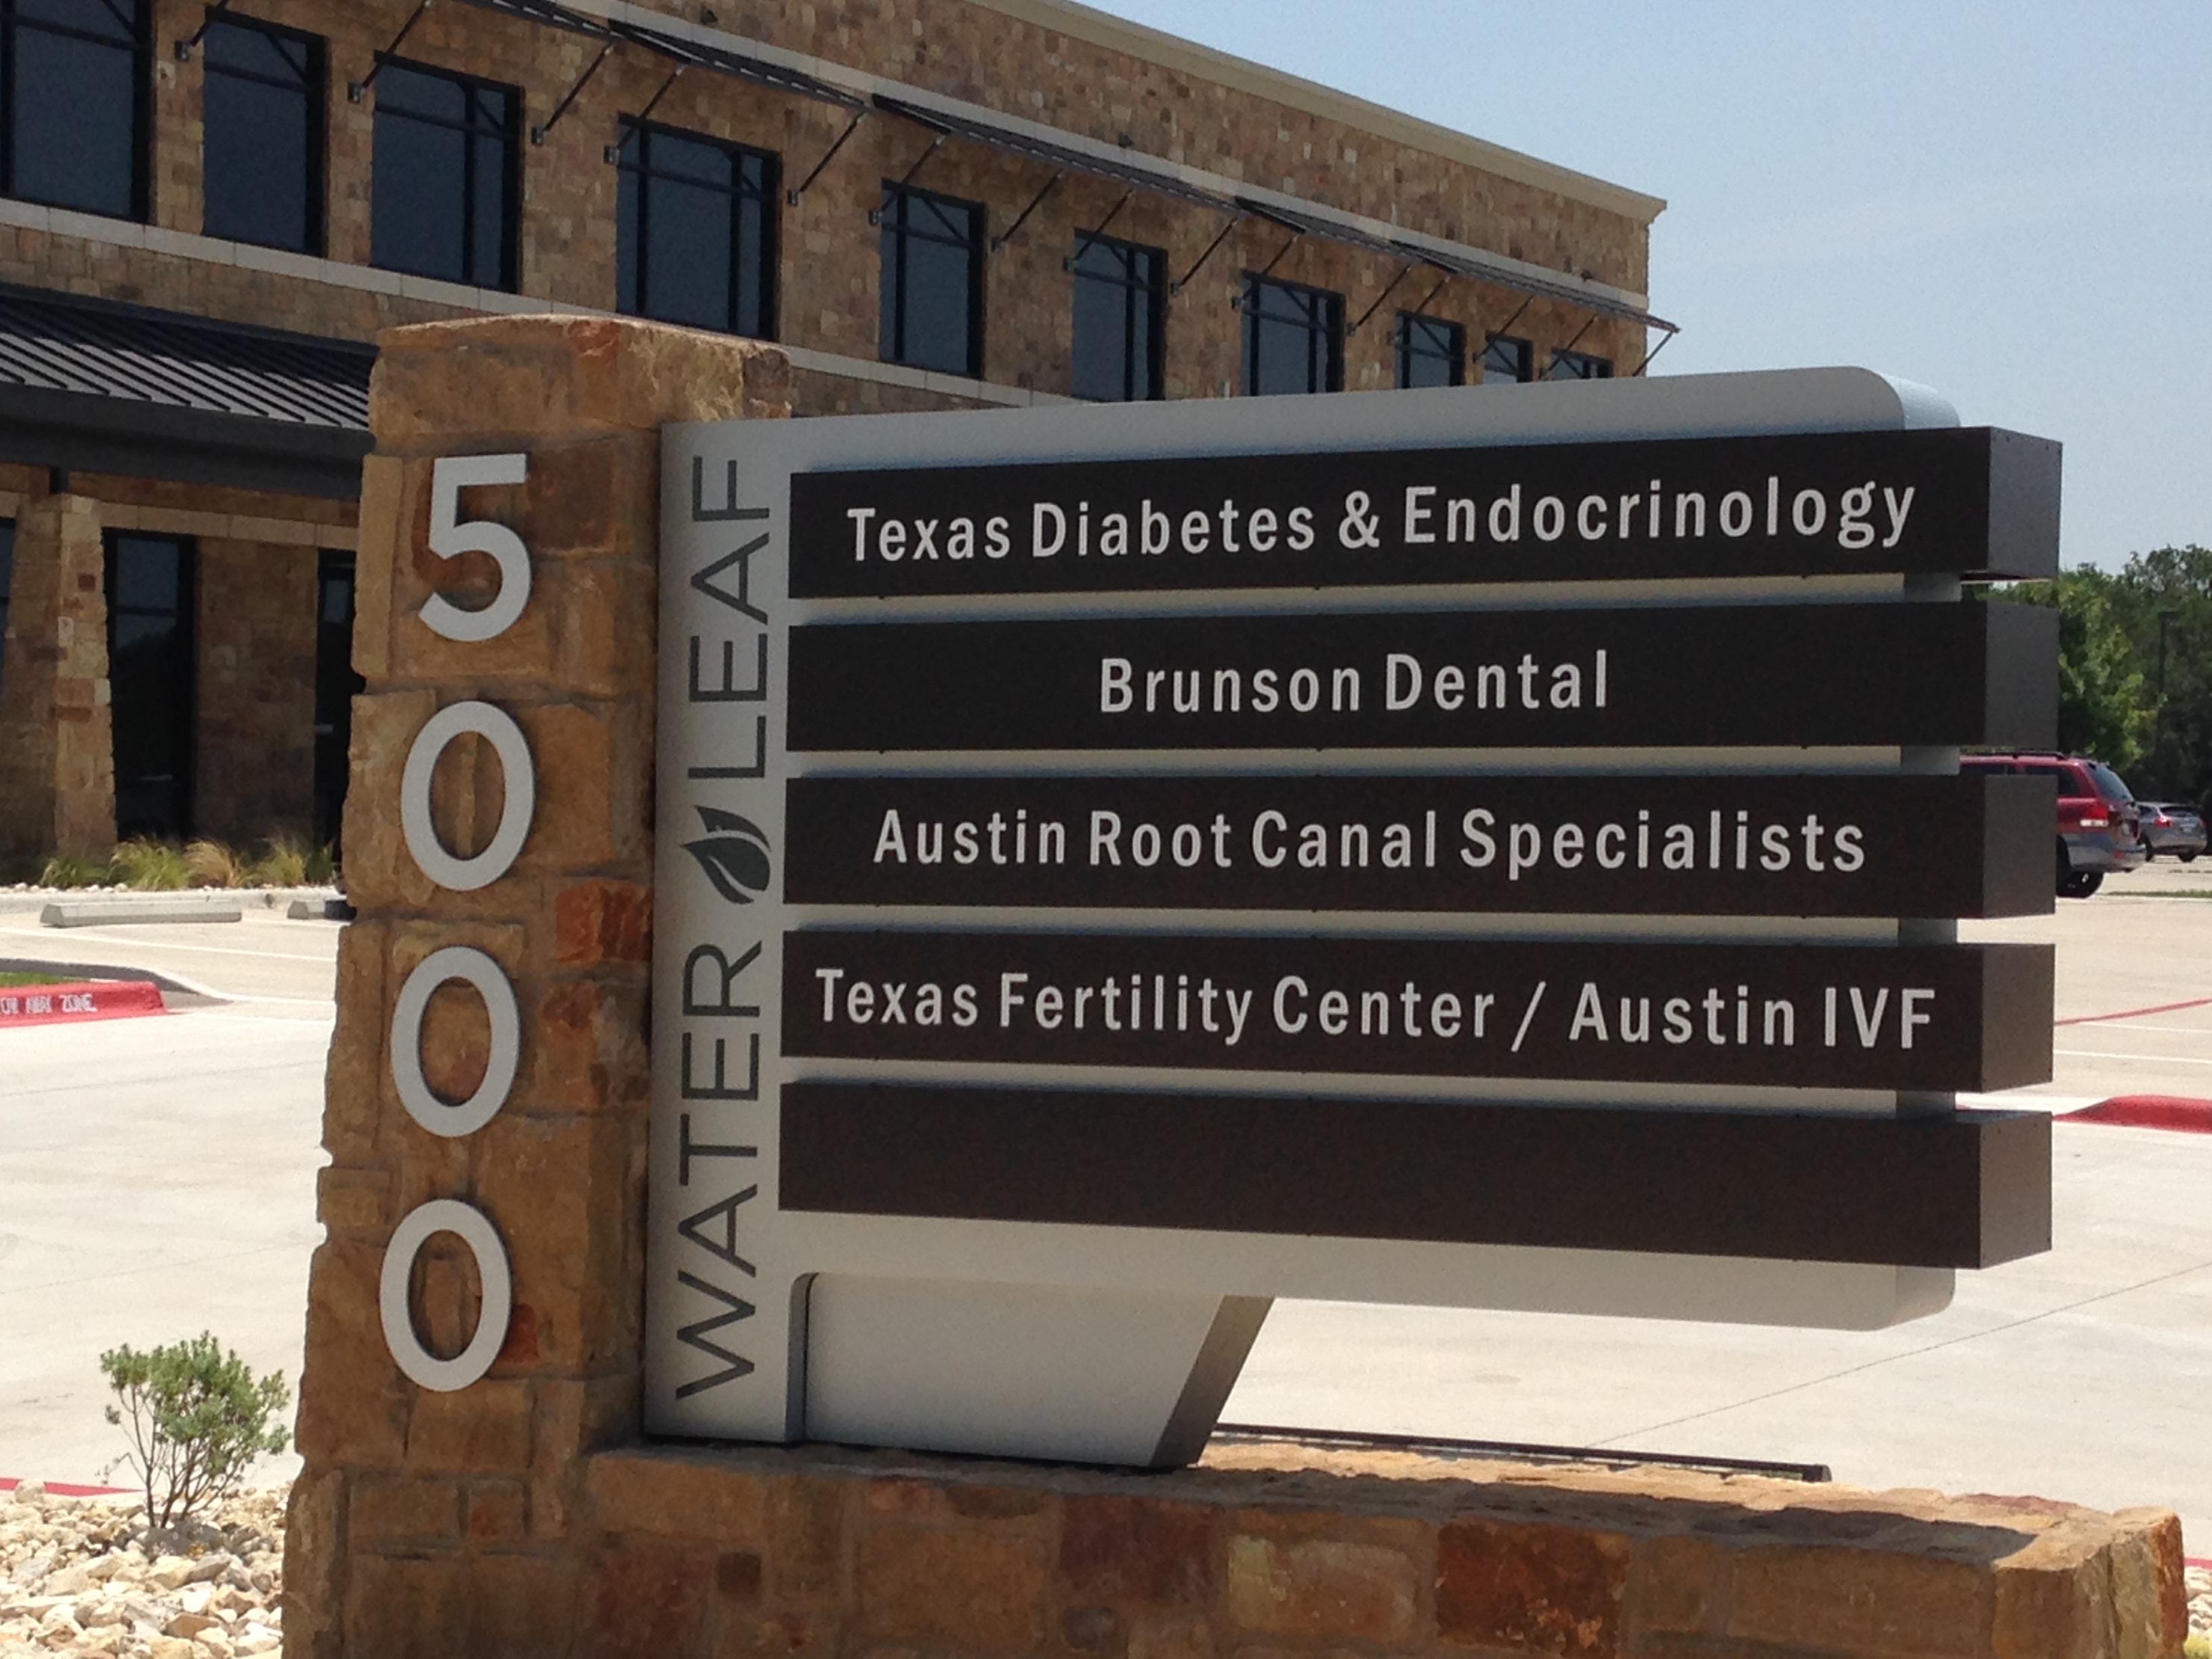 TFC - South Austin Fertility Center